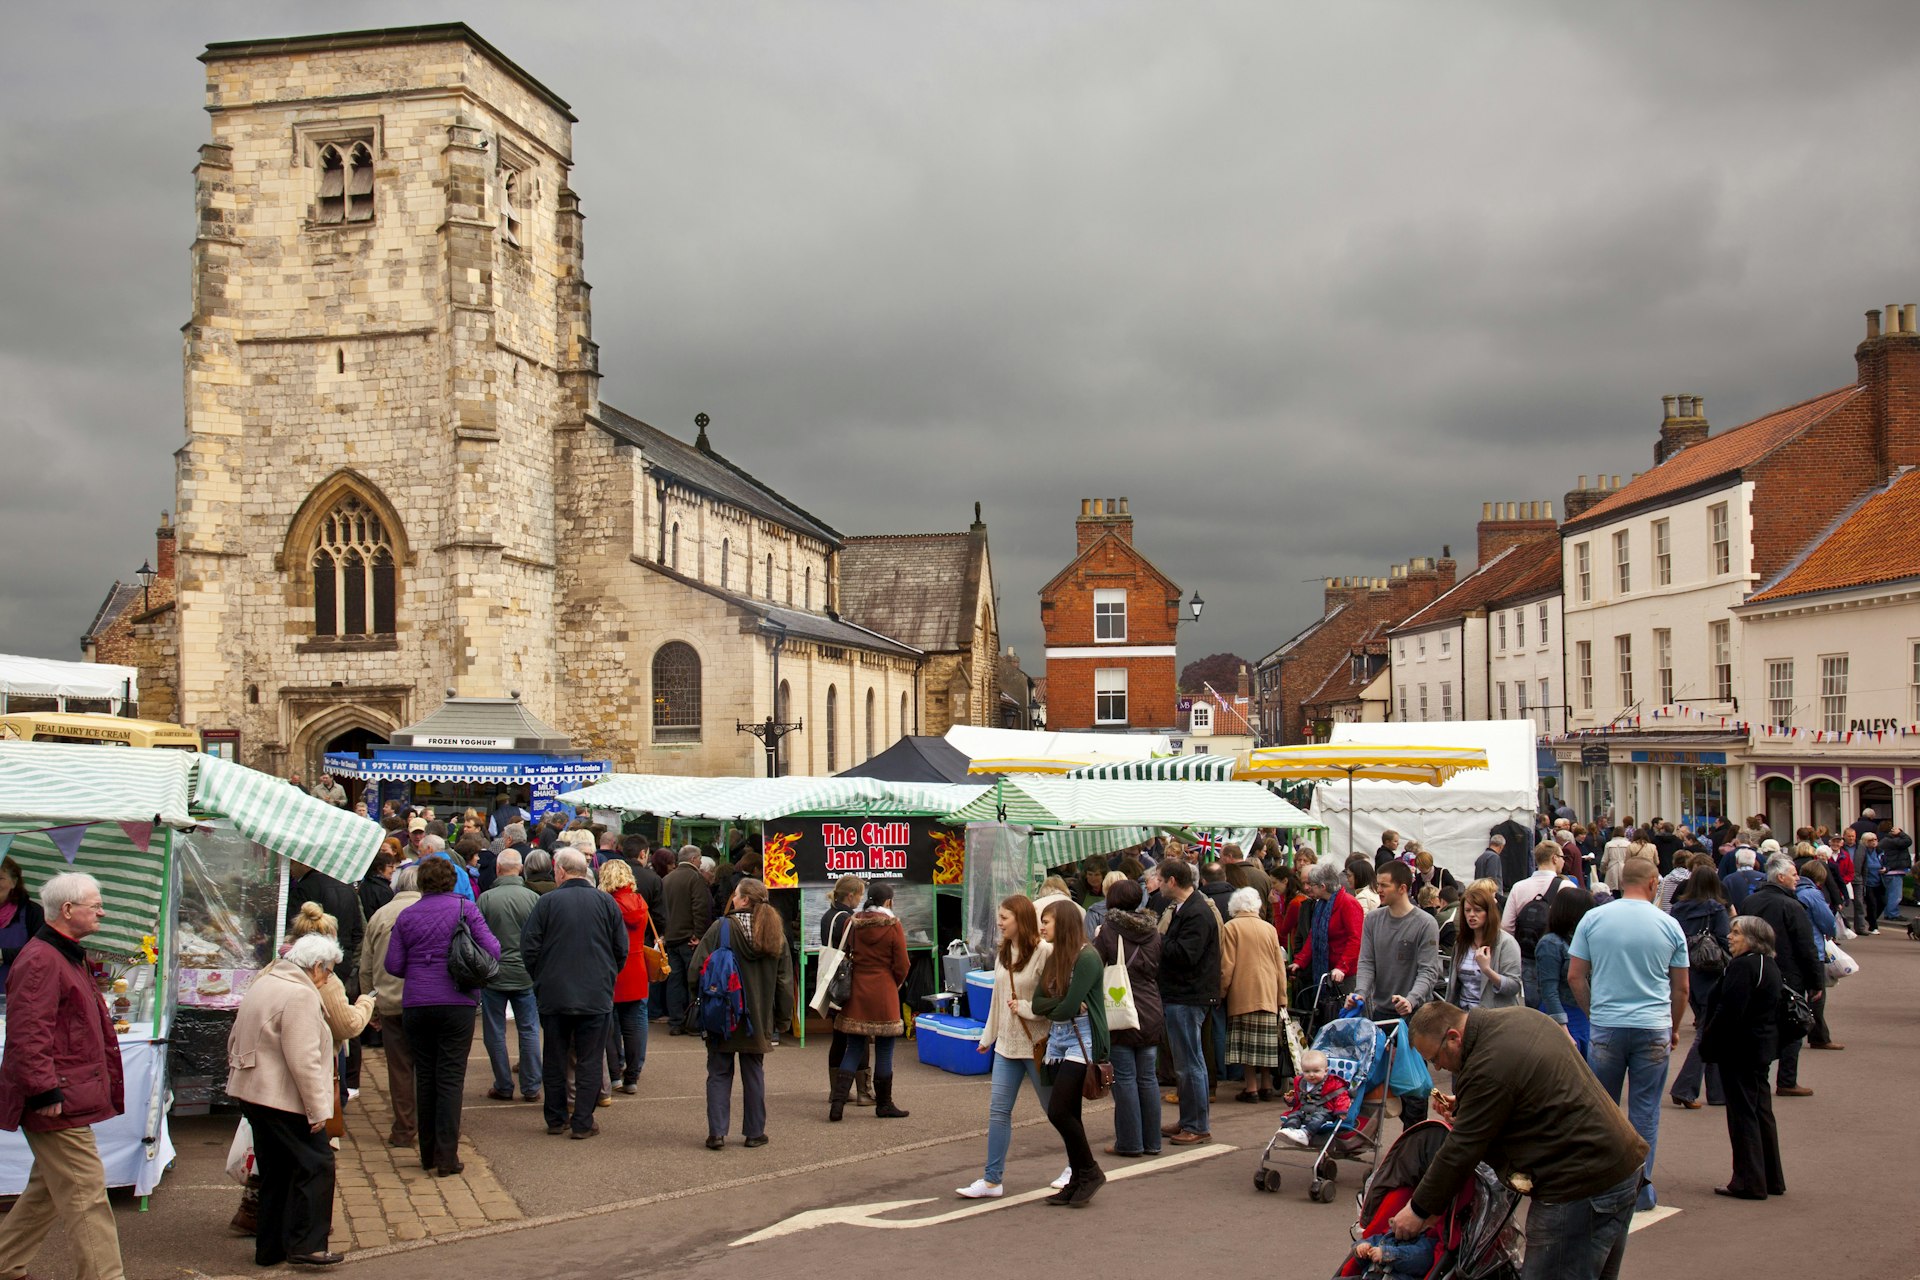 Market stalls set up in Malton, England